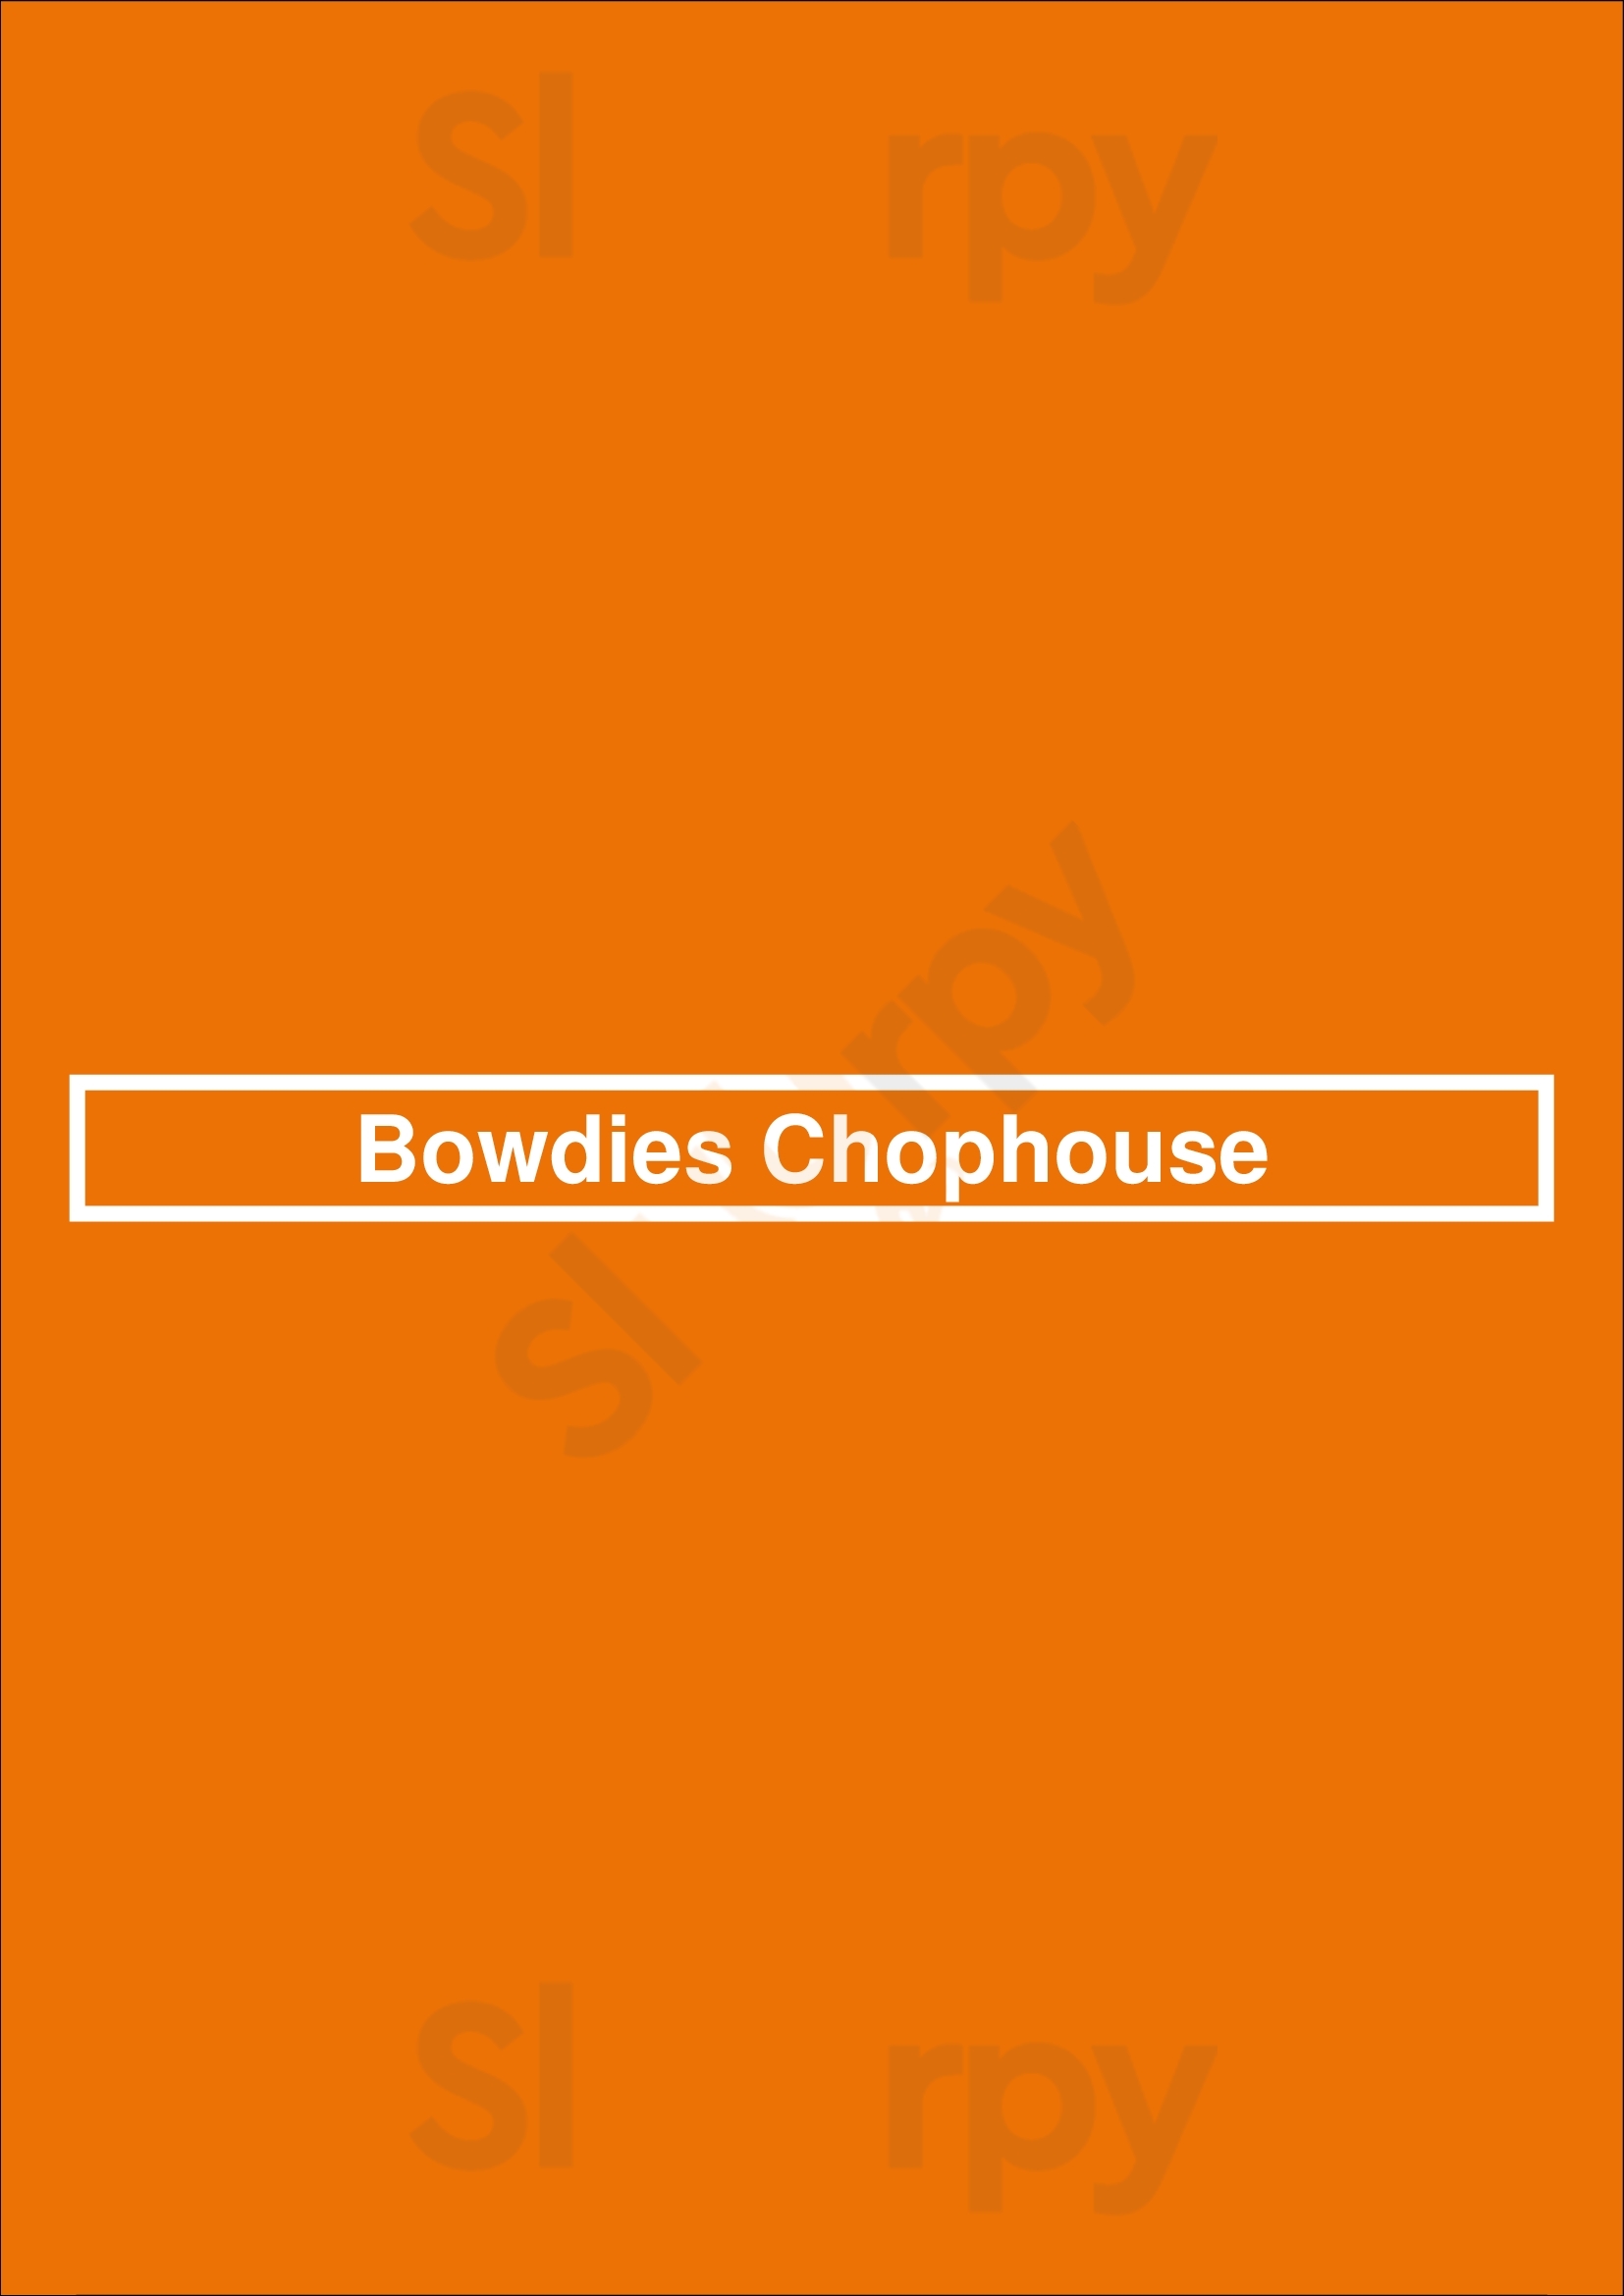 Bowdies Chophouse Saugatuck Menu - 1